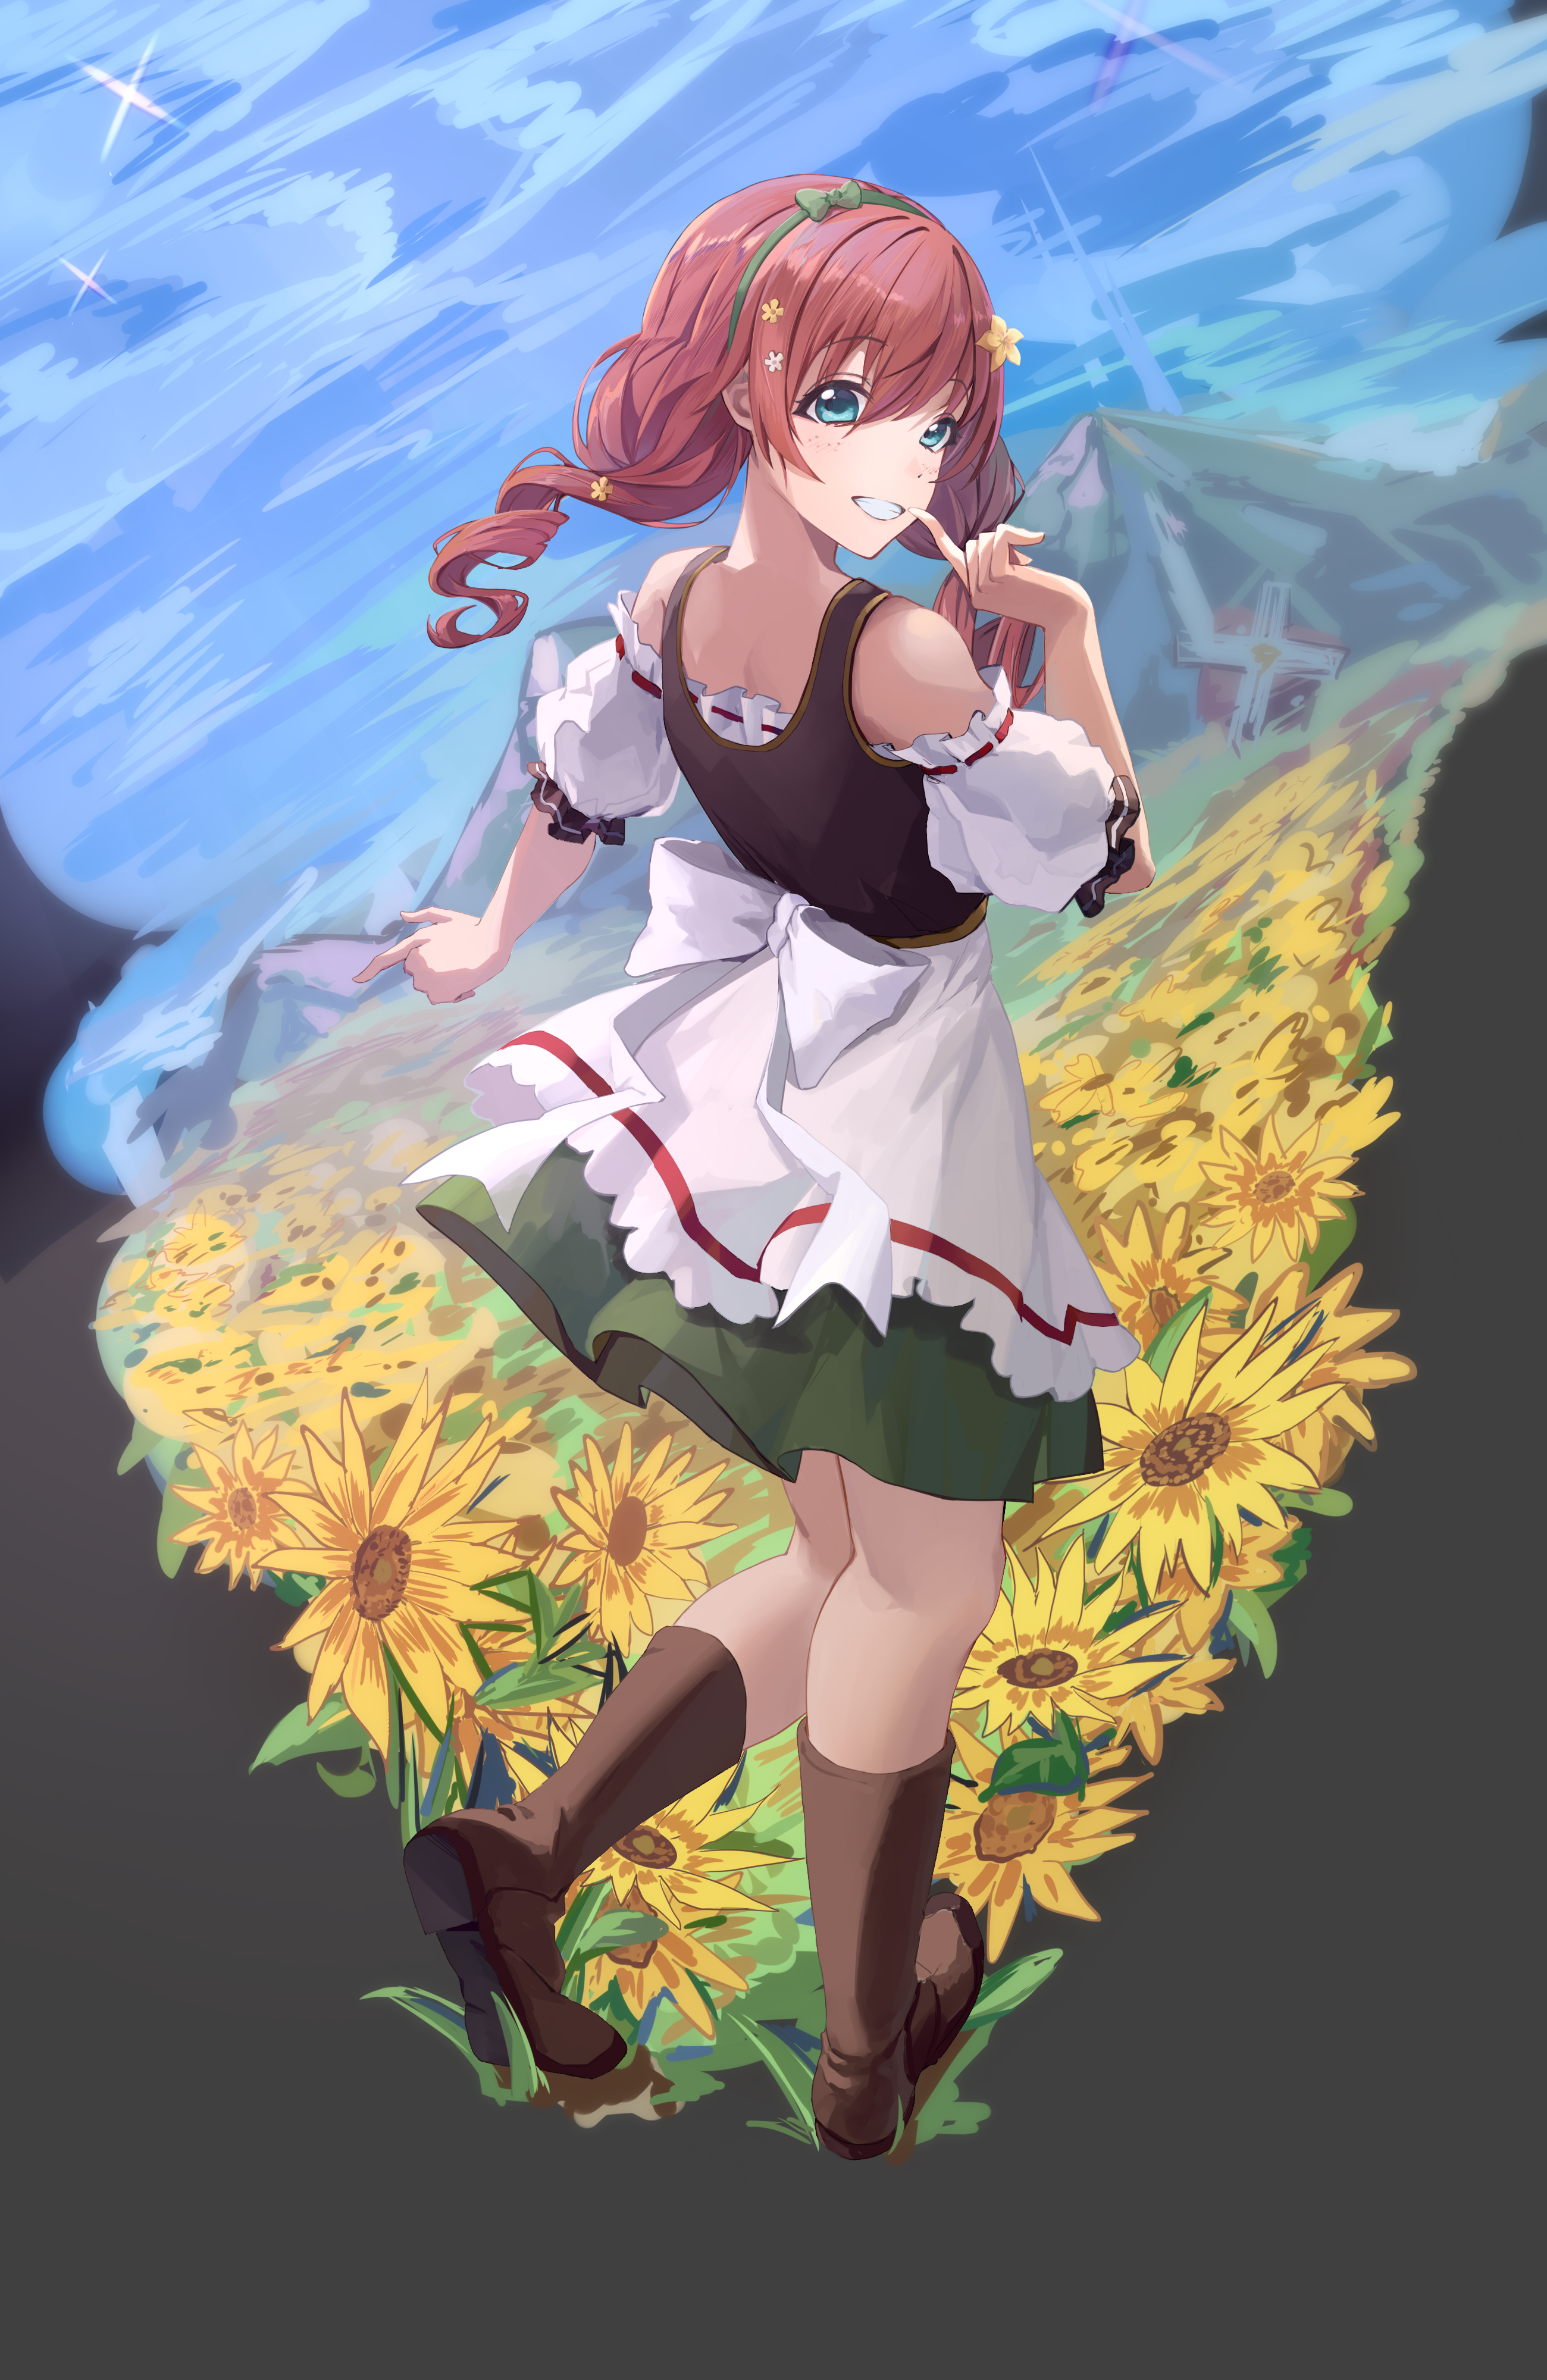 Anime 2600x4000 anime anime girls flowers dandelion redhead blue eyes mountains flower in hair boots